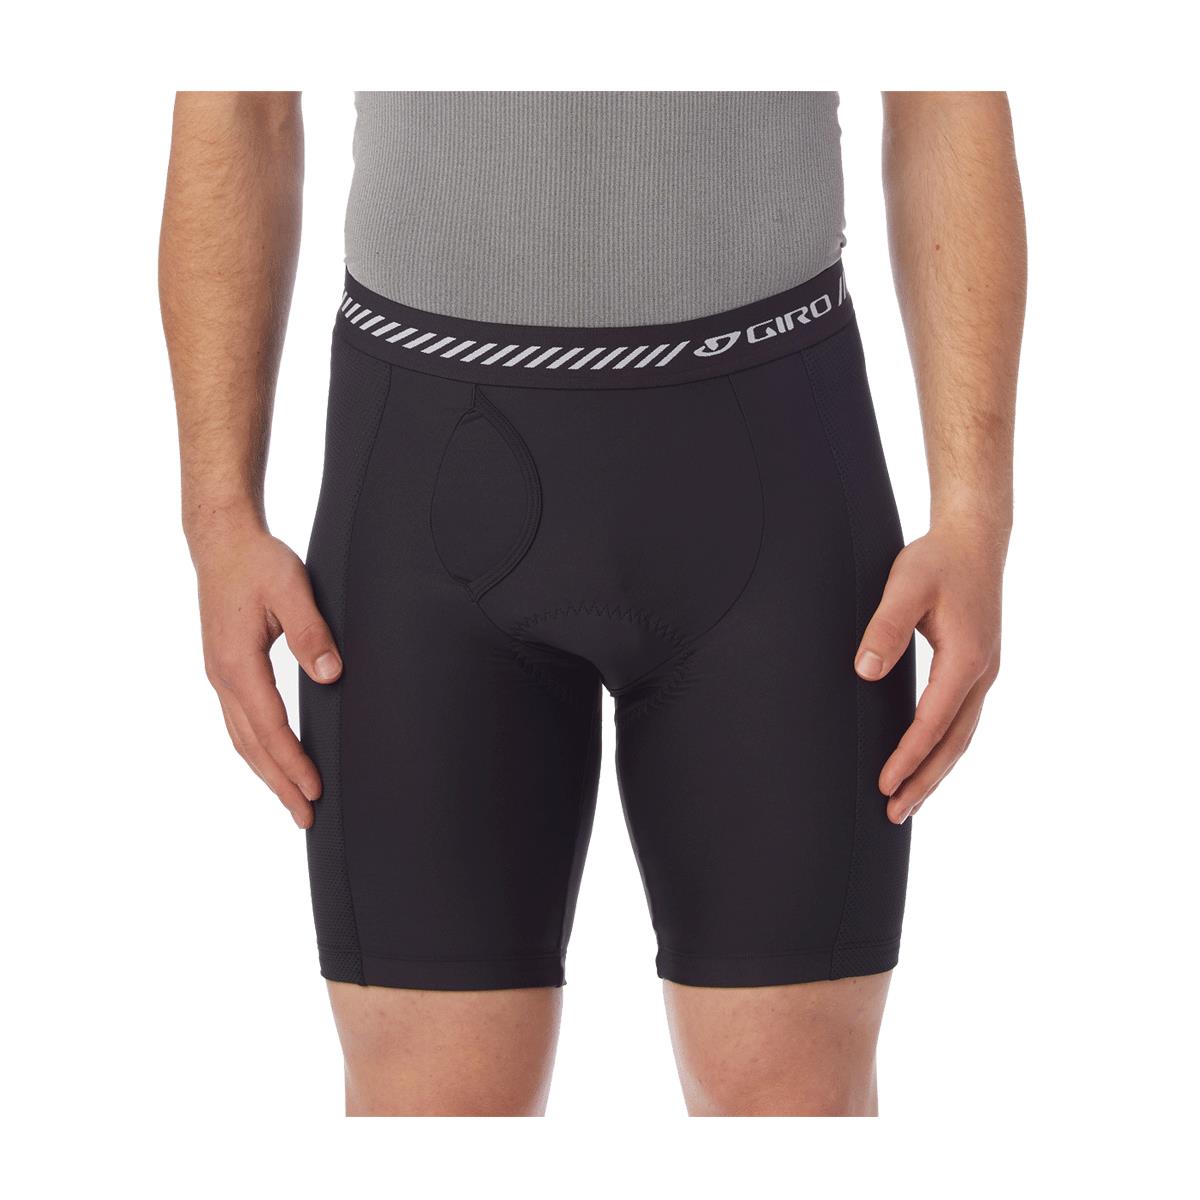 Giro Base Liner Shorts